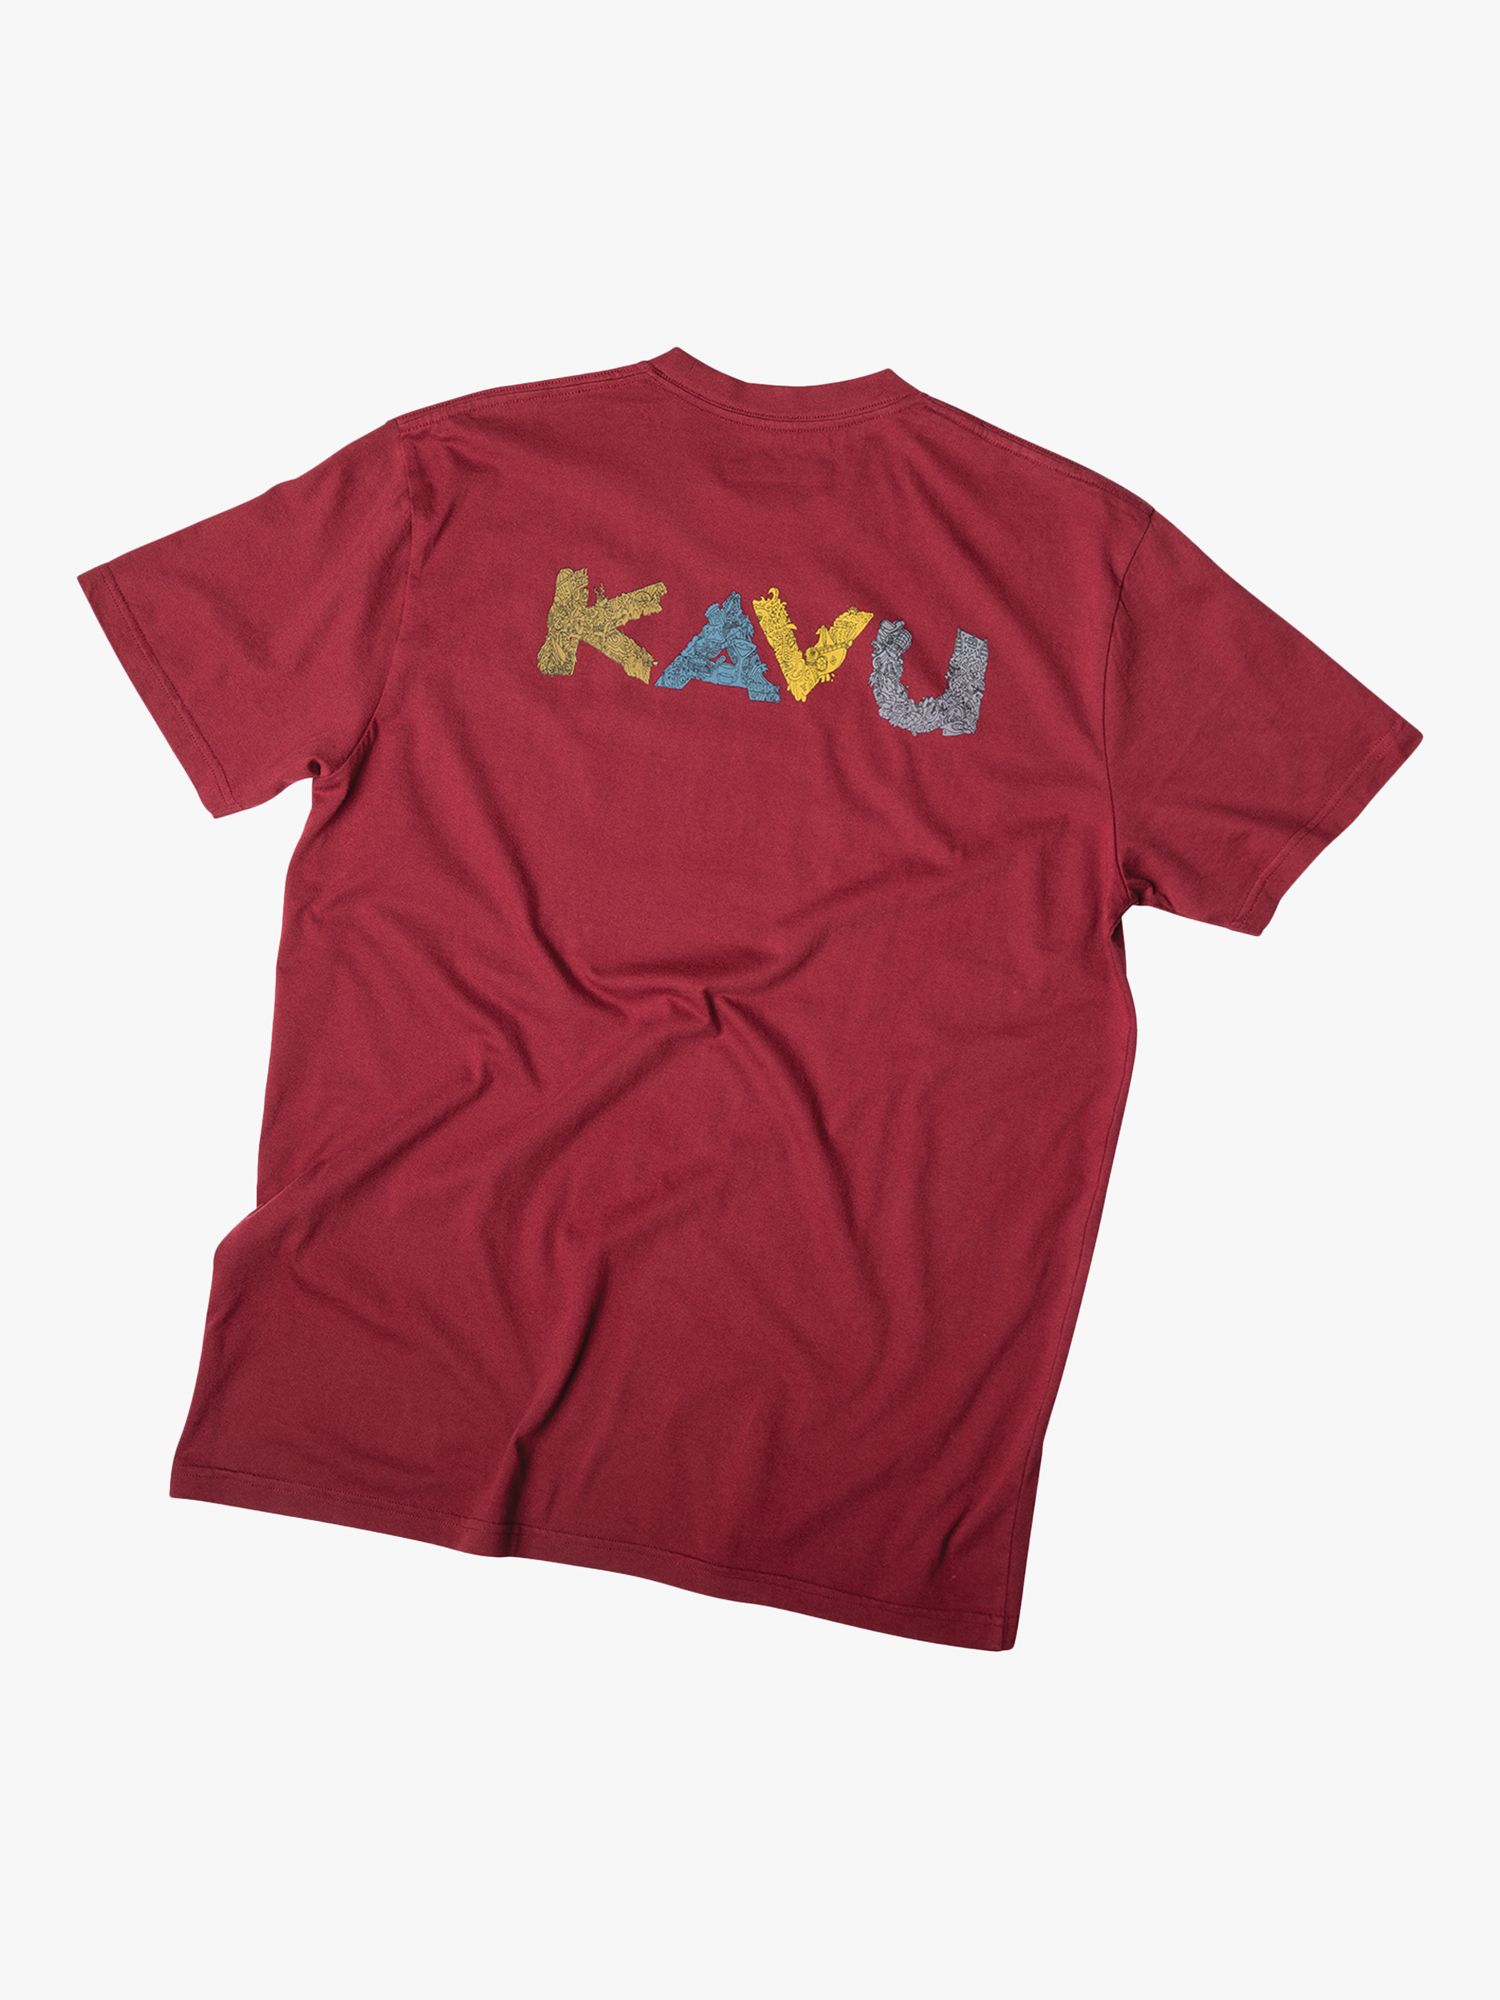 KAVU Doddle Days Organic Cotton Short Sleeve T-Shirt, Port, M